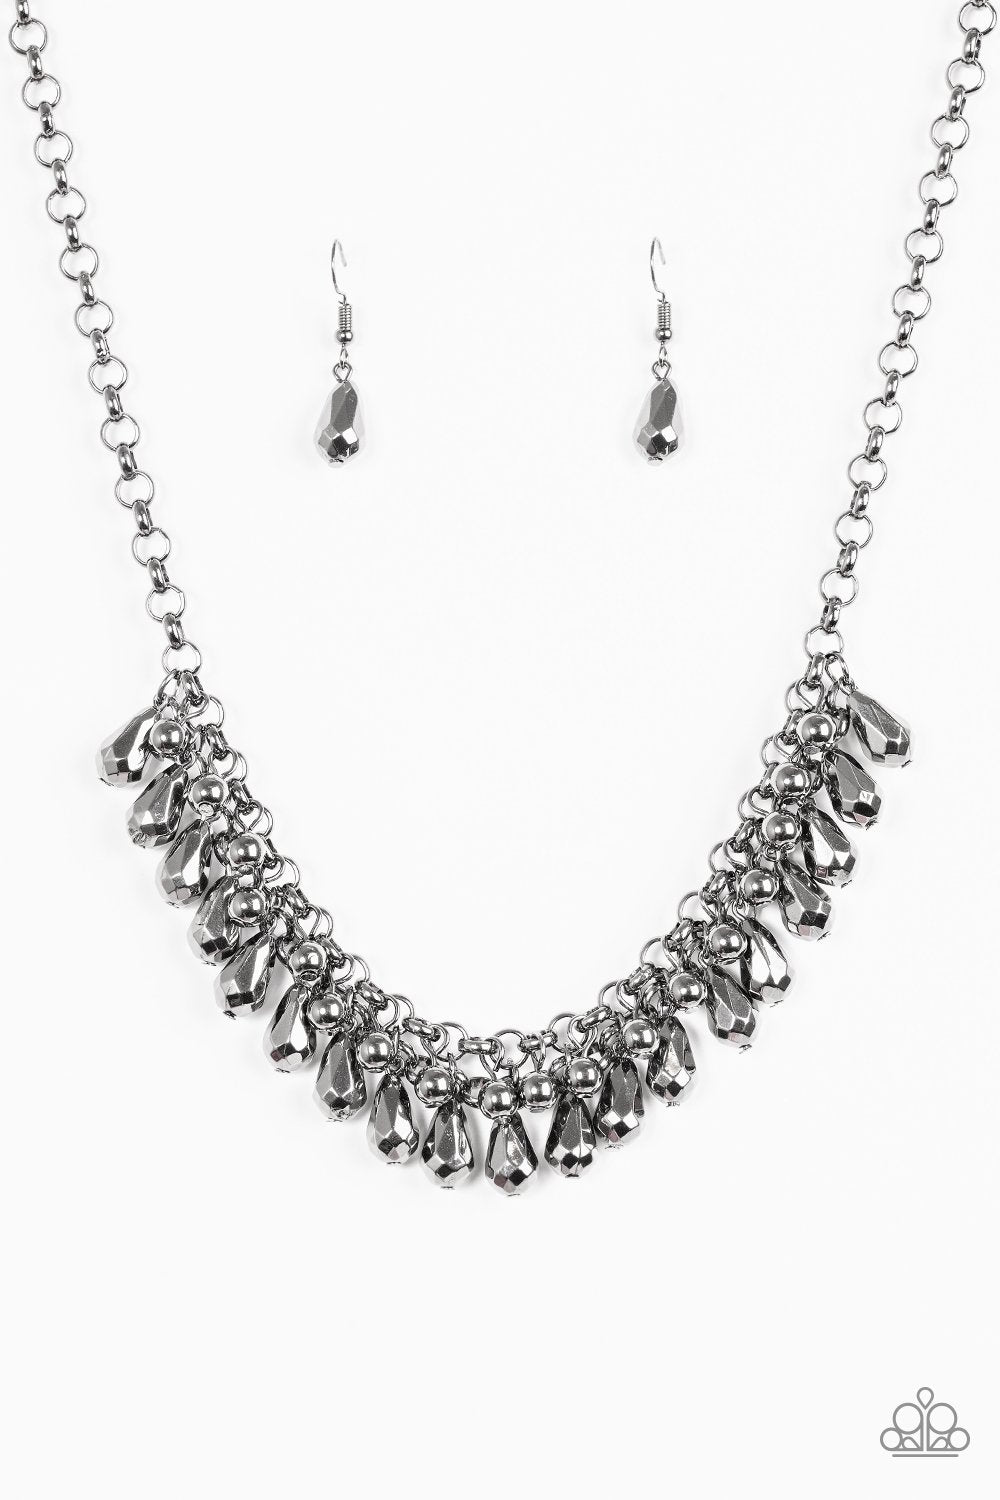 Prima Diva Gunmetal Black Teardrop Fringe Necklace - Paparazzi Accessories-CarasShop.com - $5 Jewelry by Cara Jewels